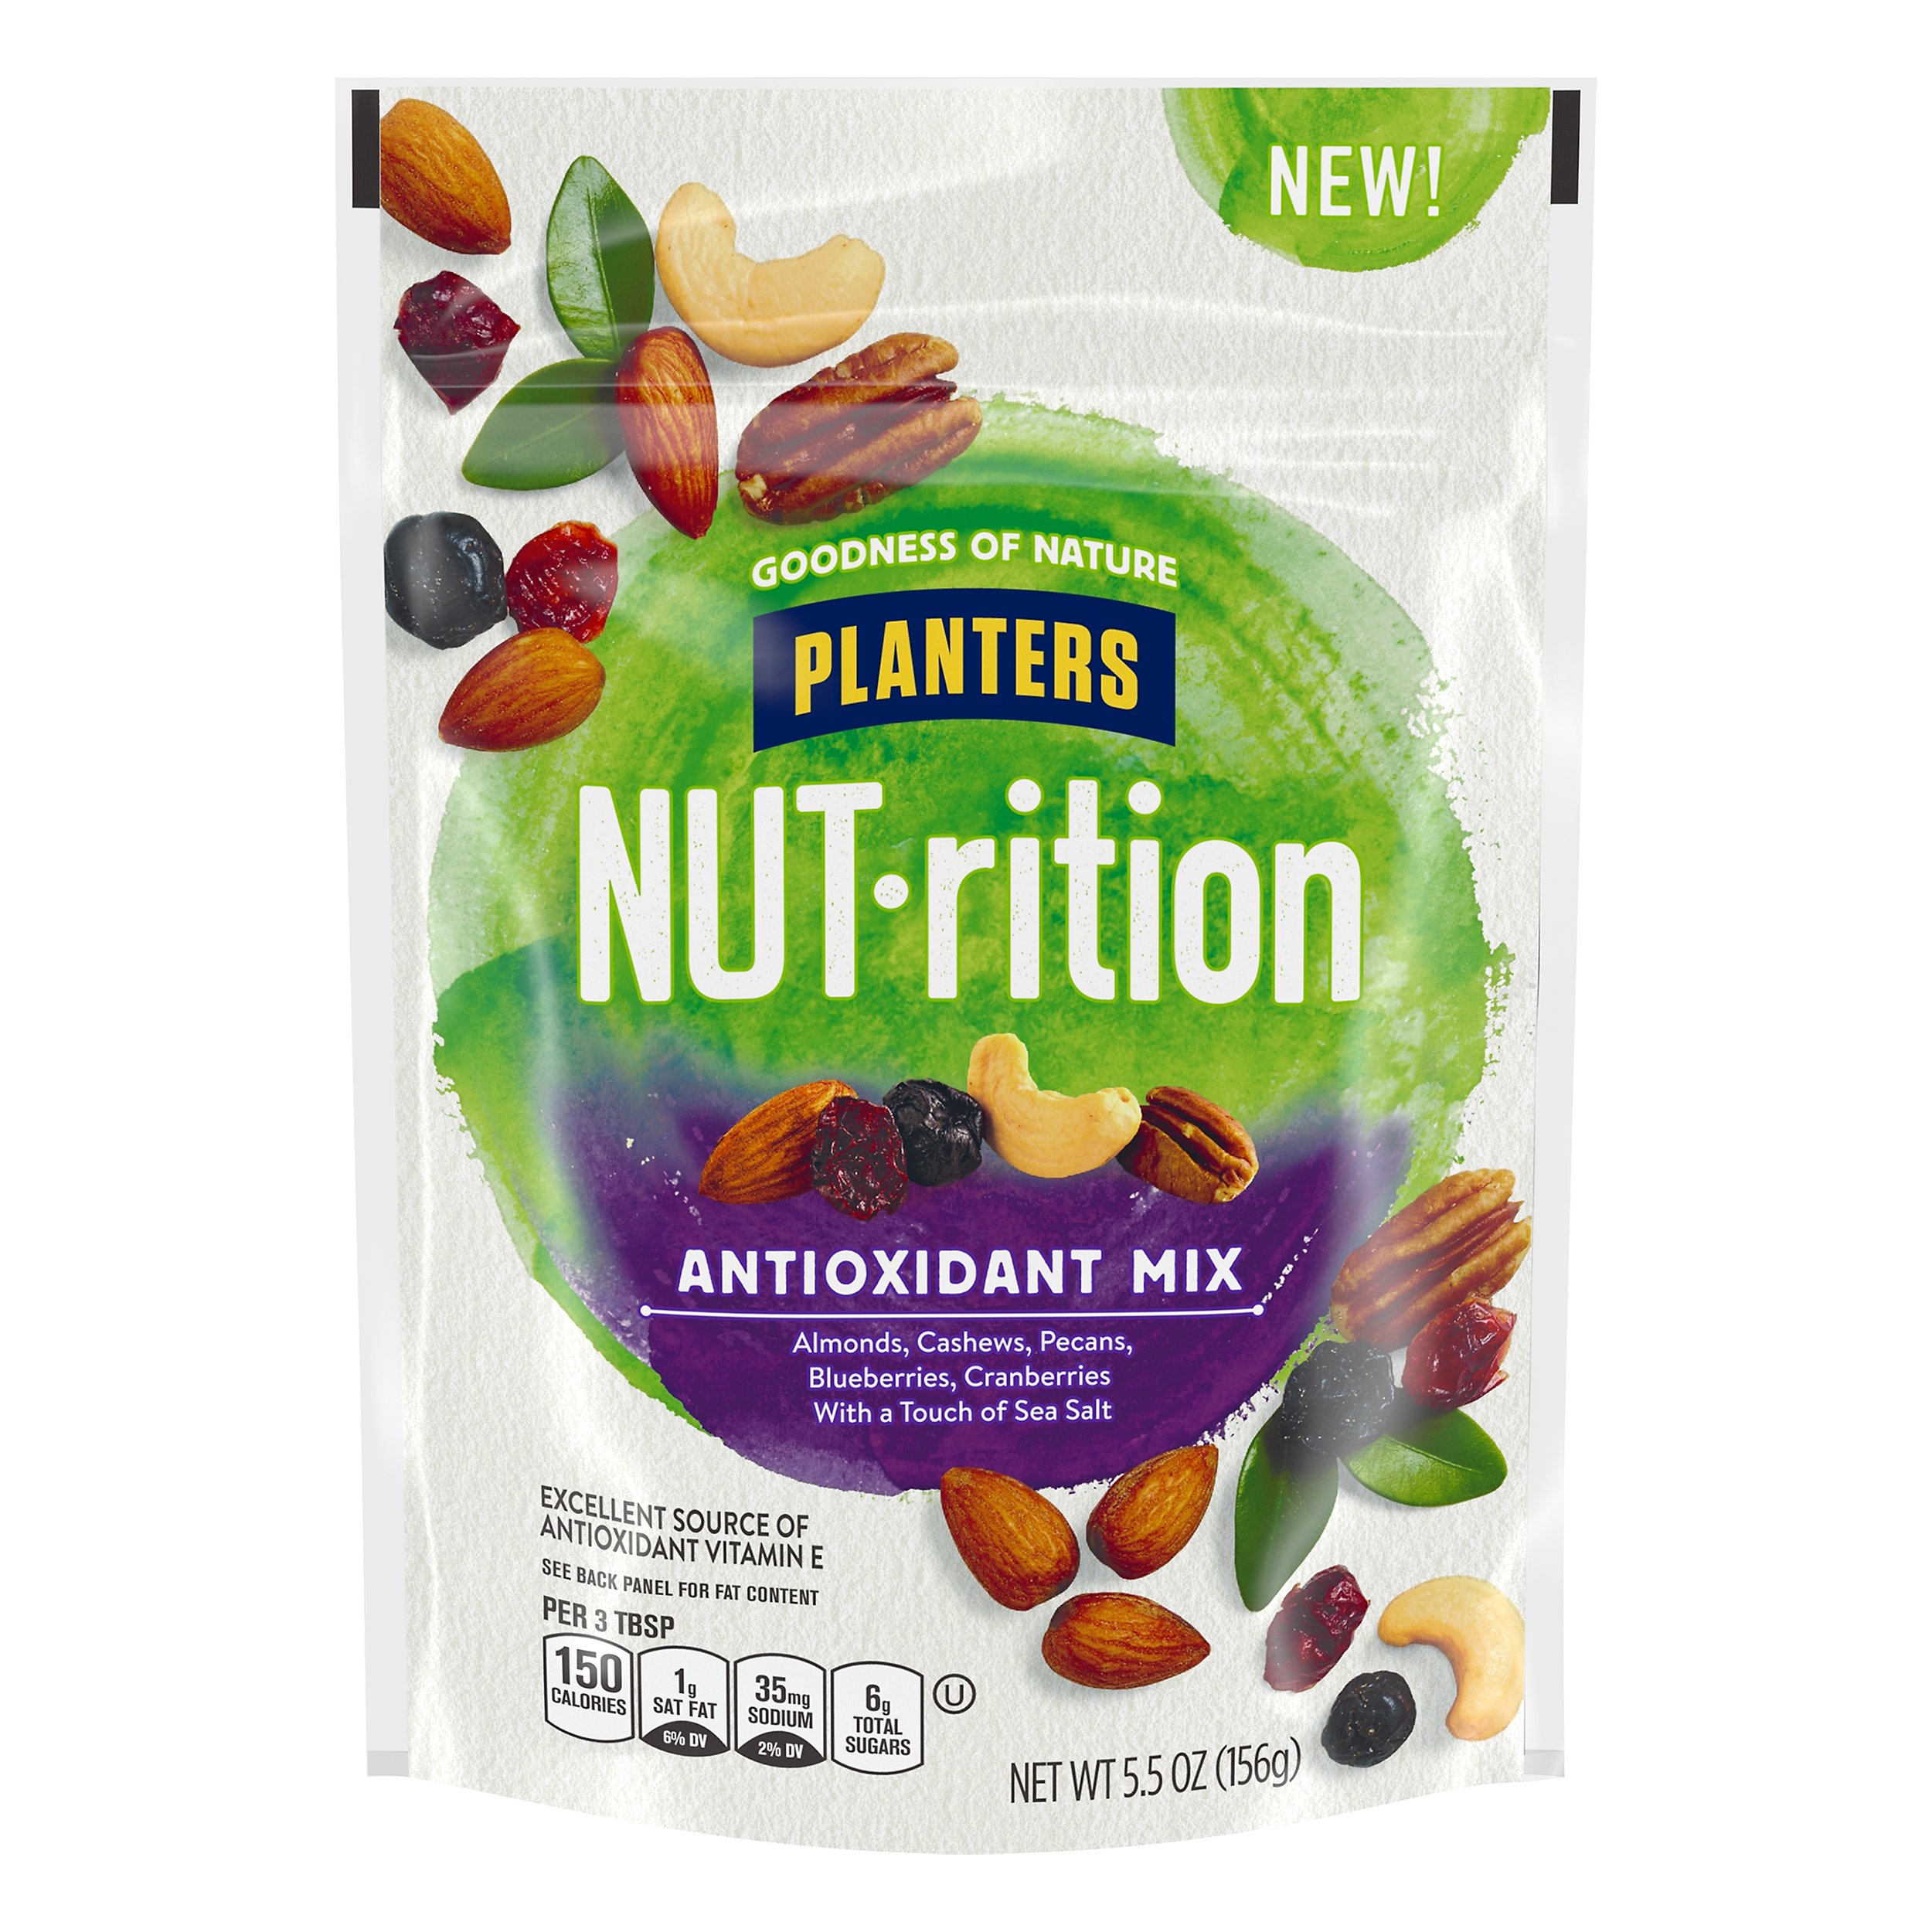 Planters NUT-rition Antioxidant Mix 5.5 OZ